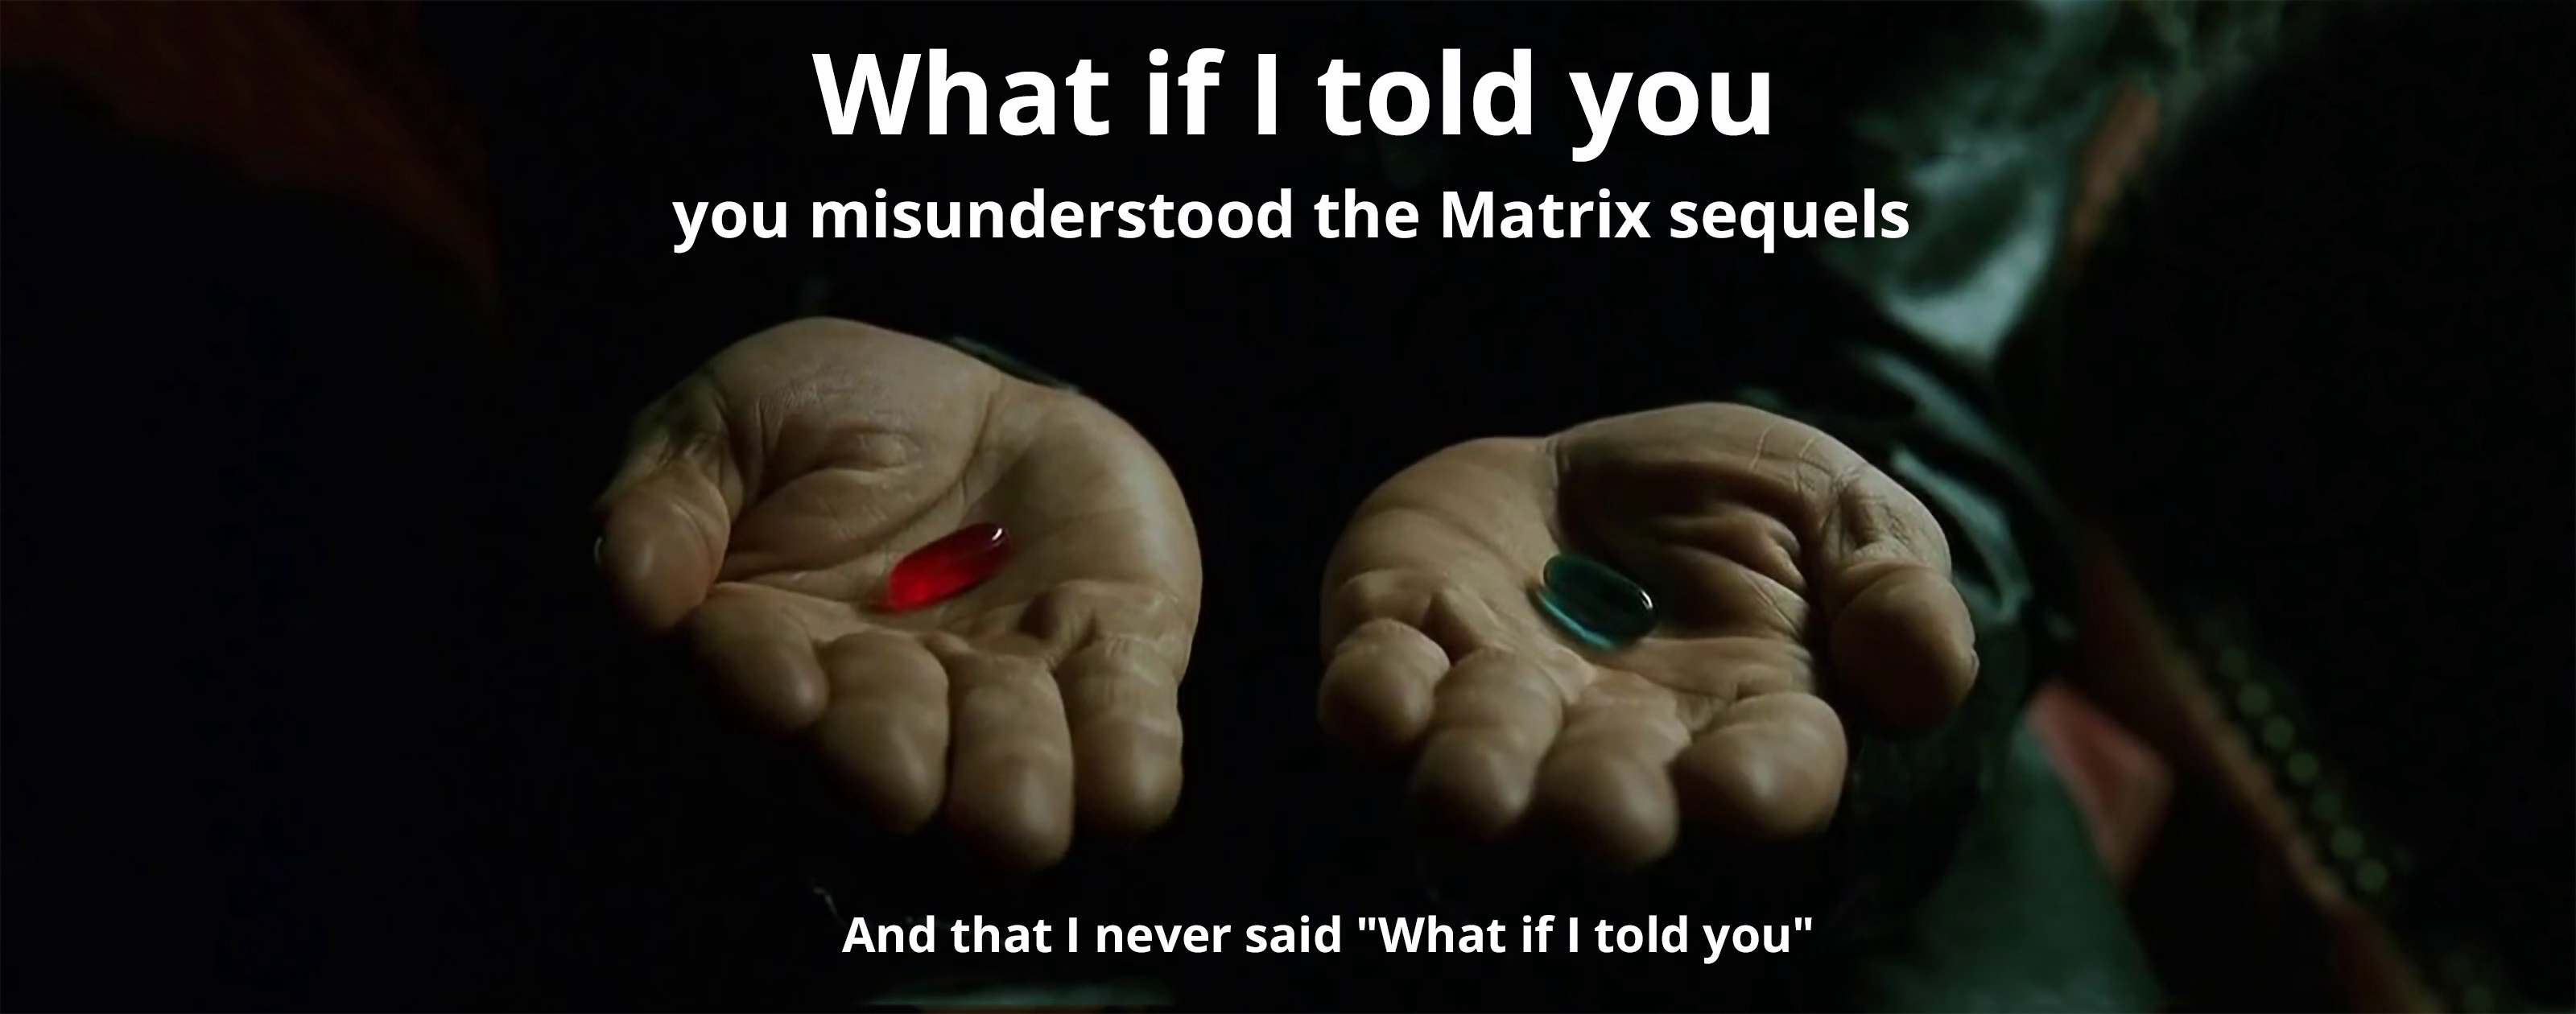 The true nature of the matrix